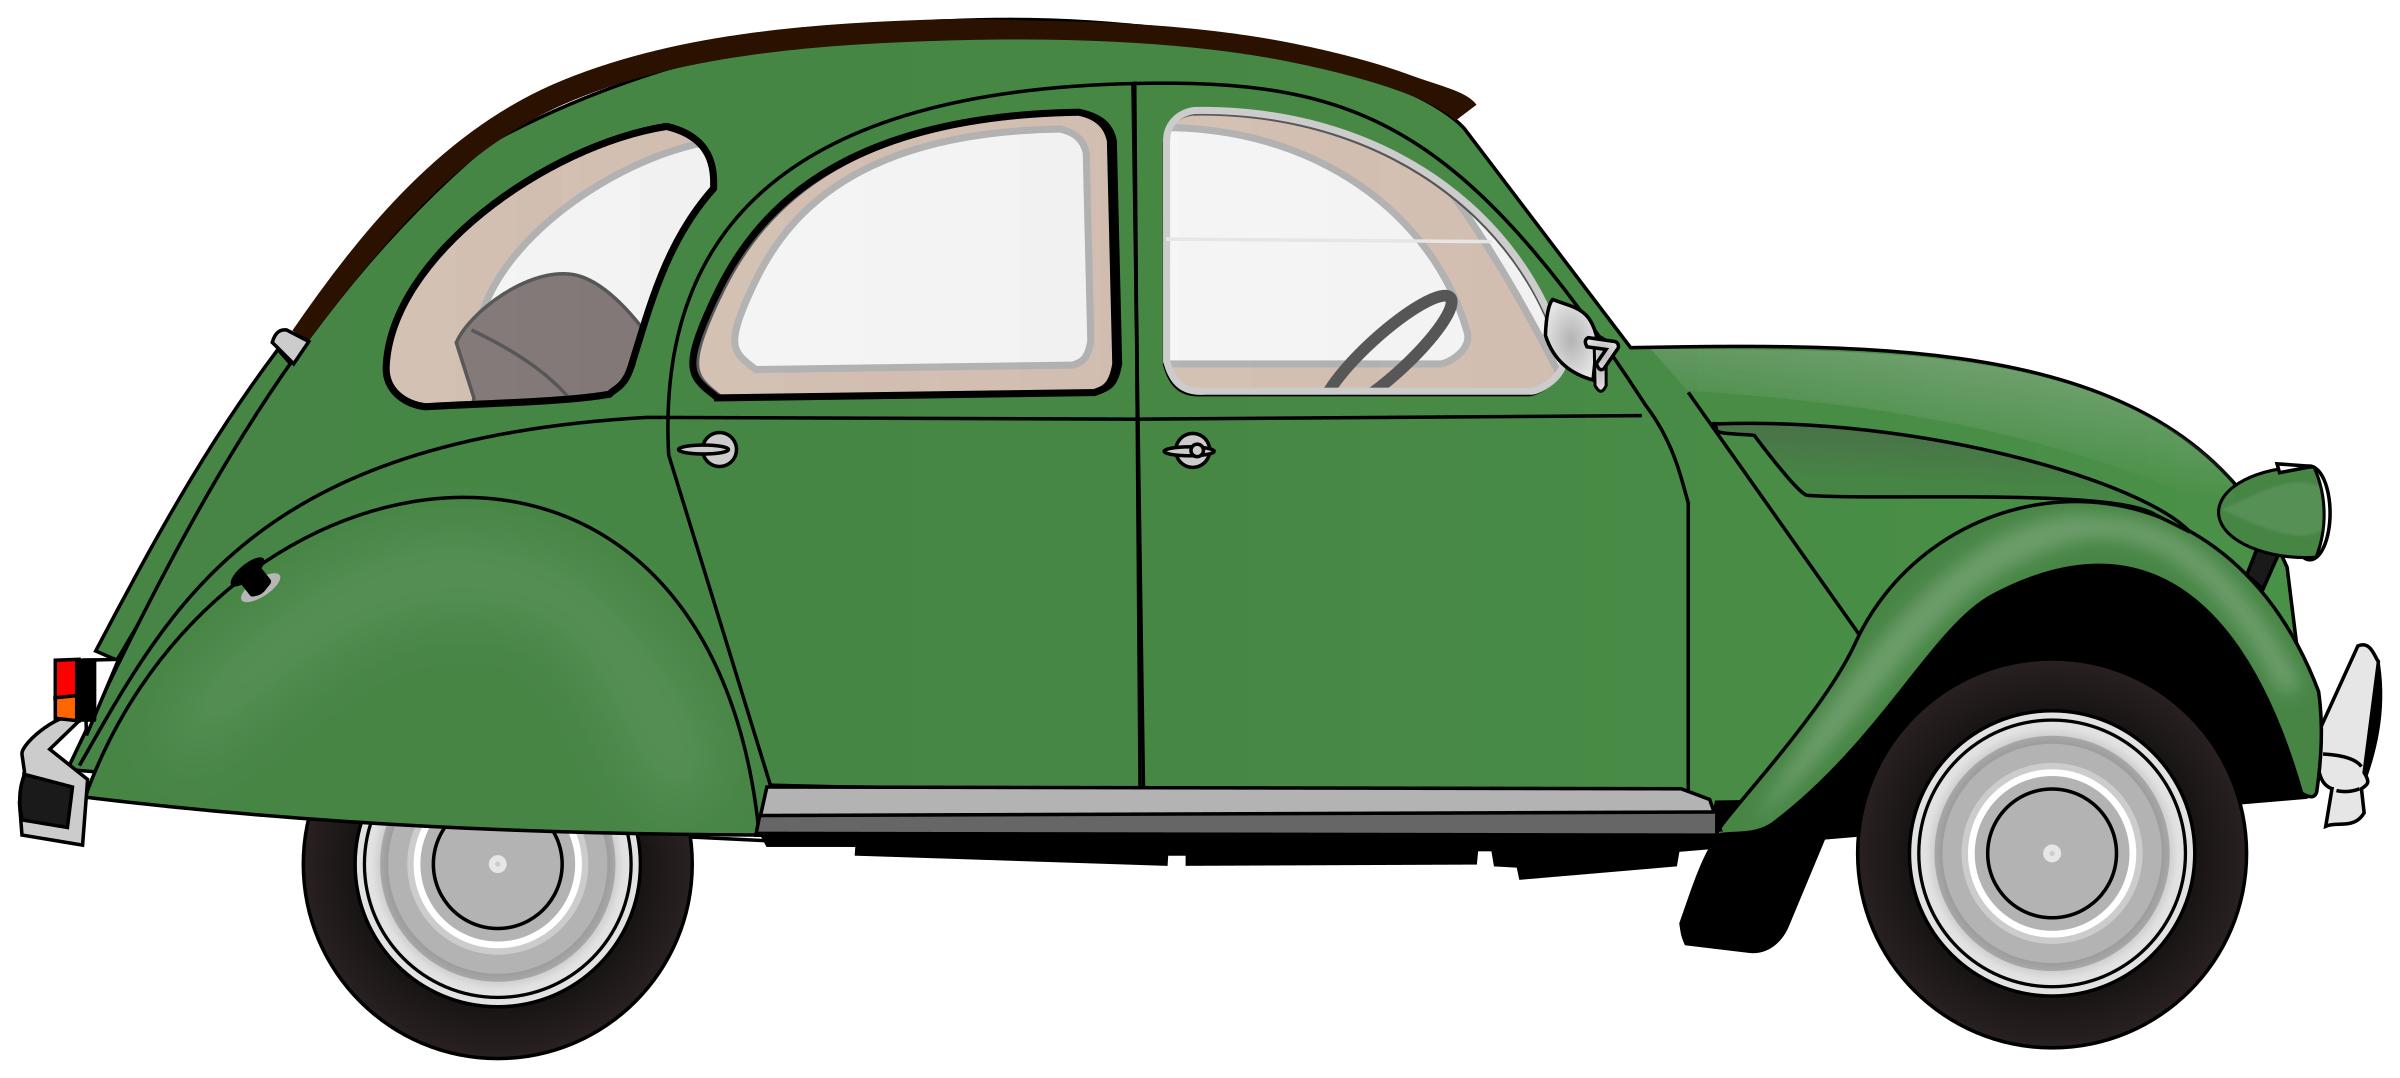 Green Car icons